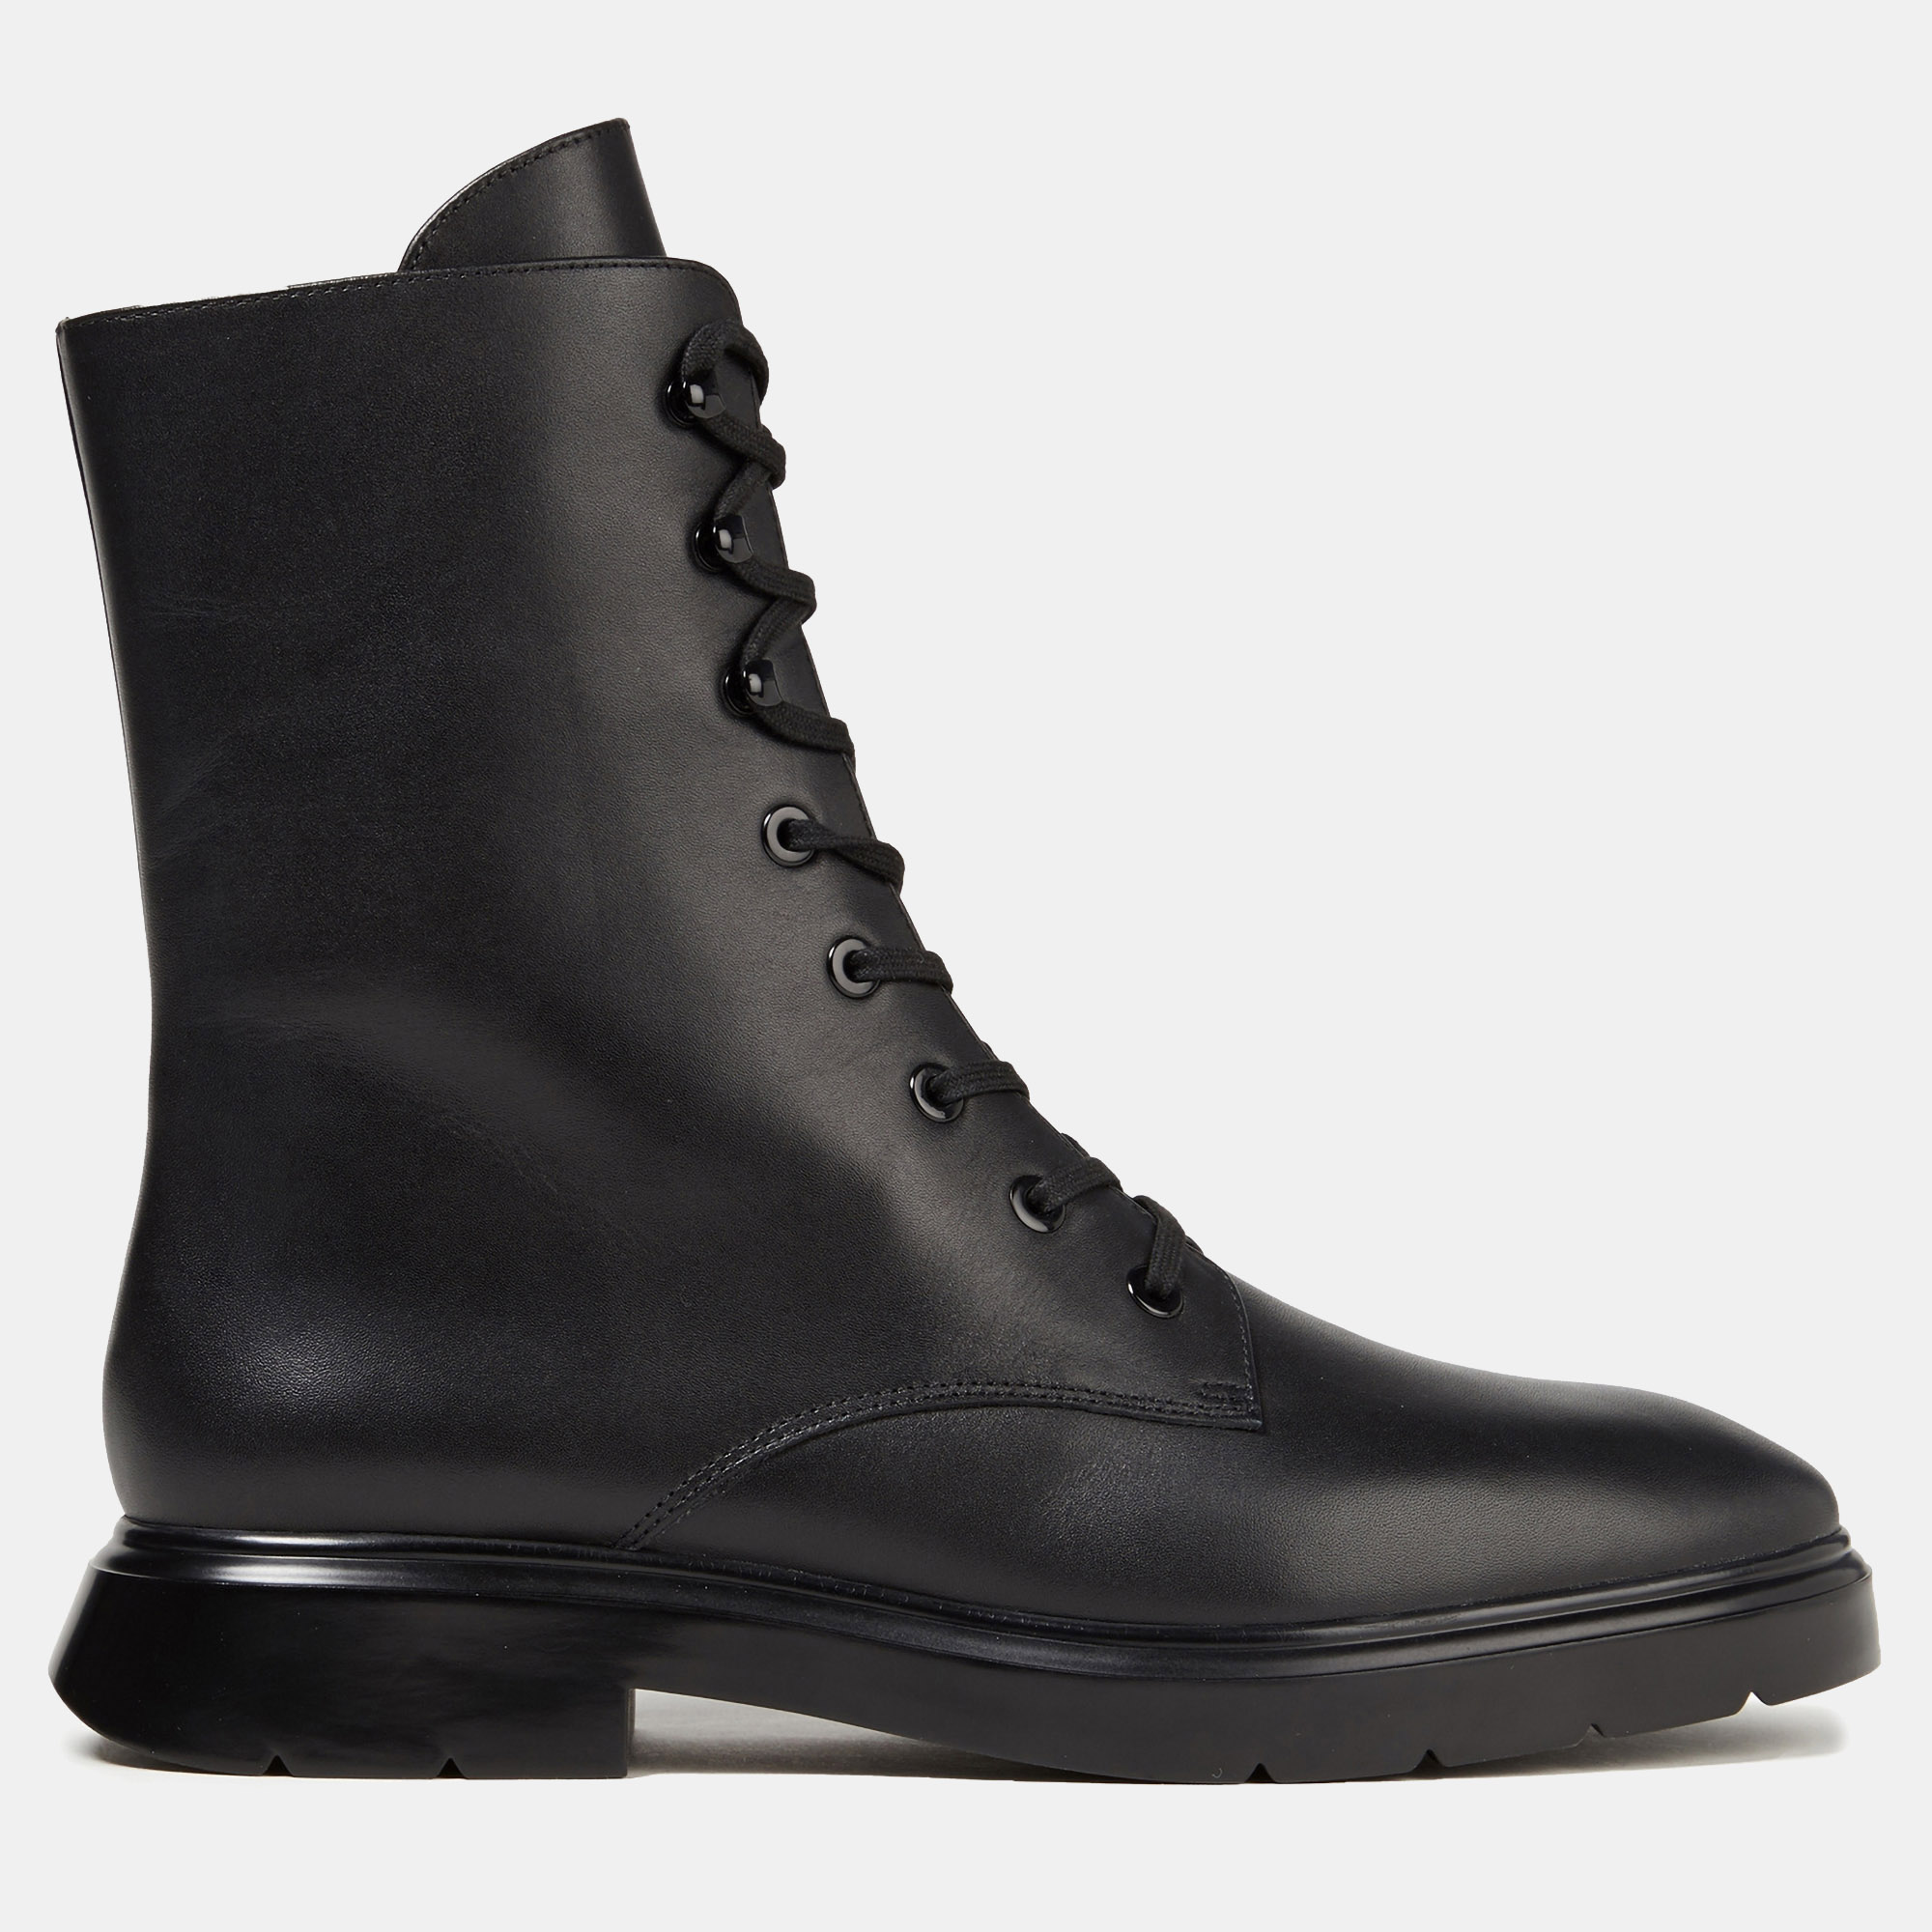 Stuart weitzman black leather ankle boots size 40